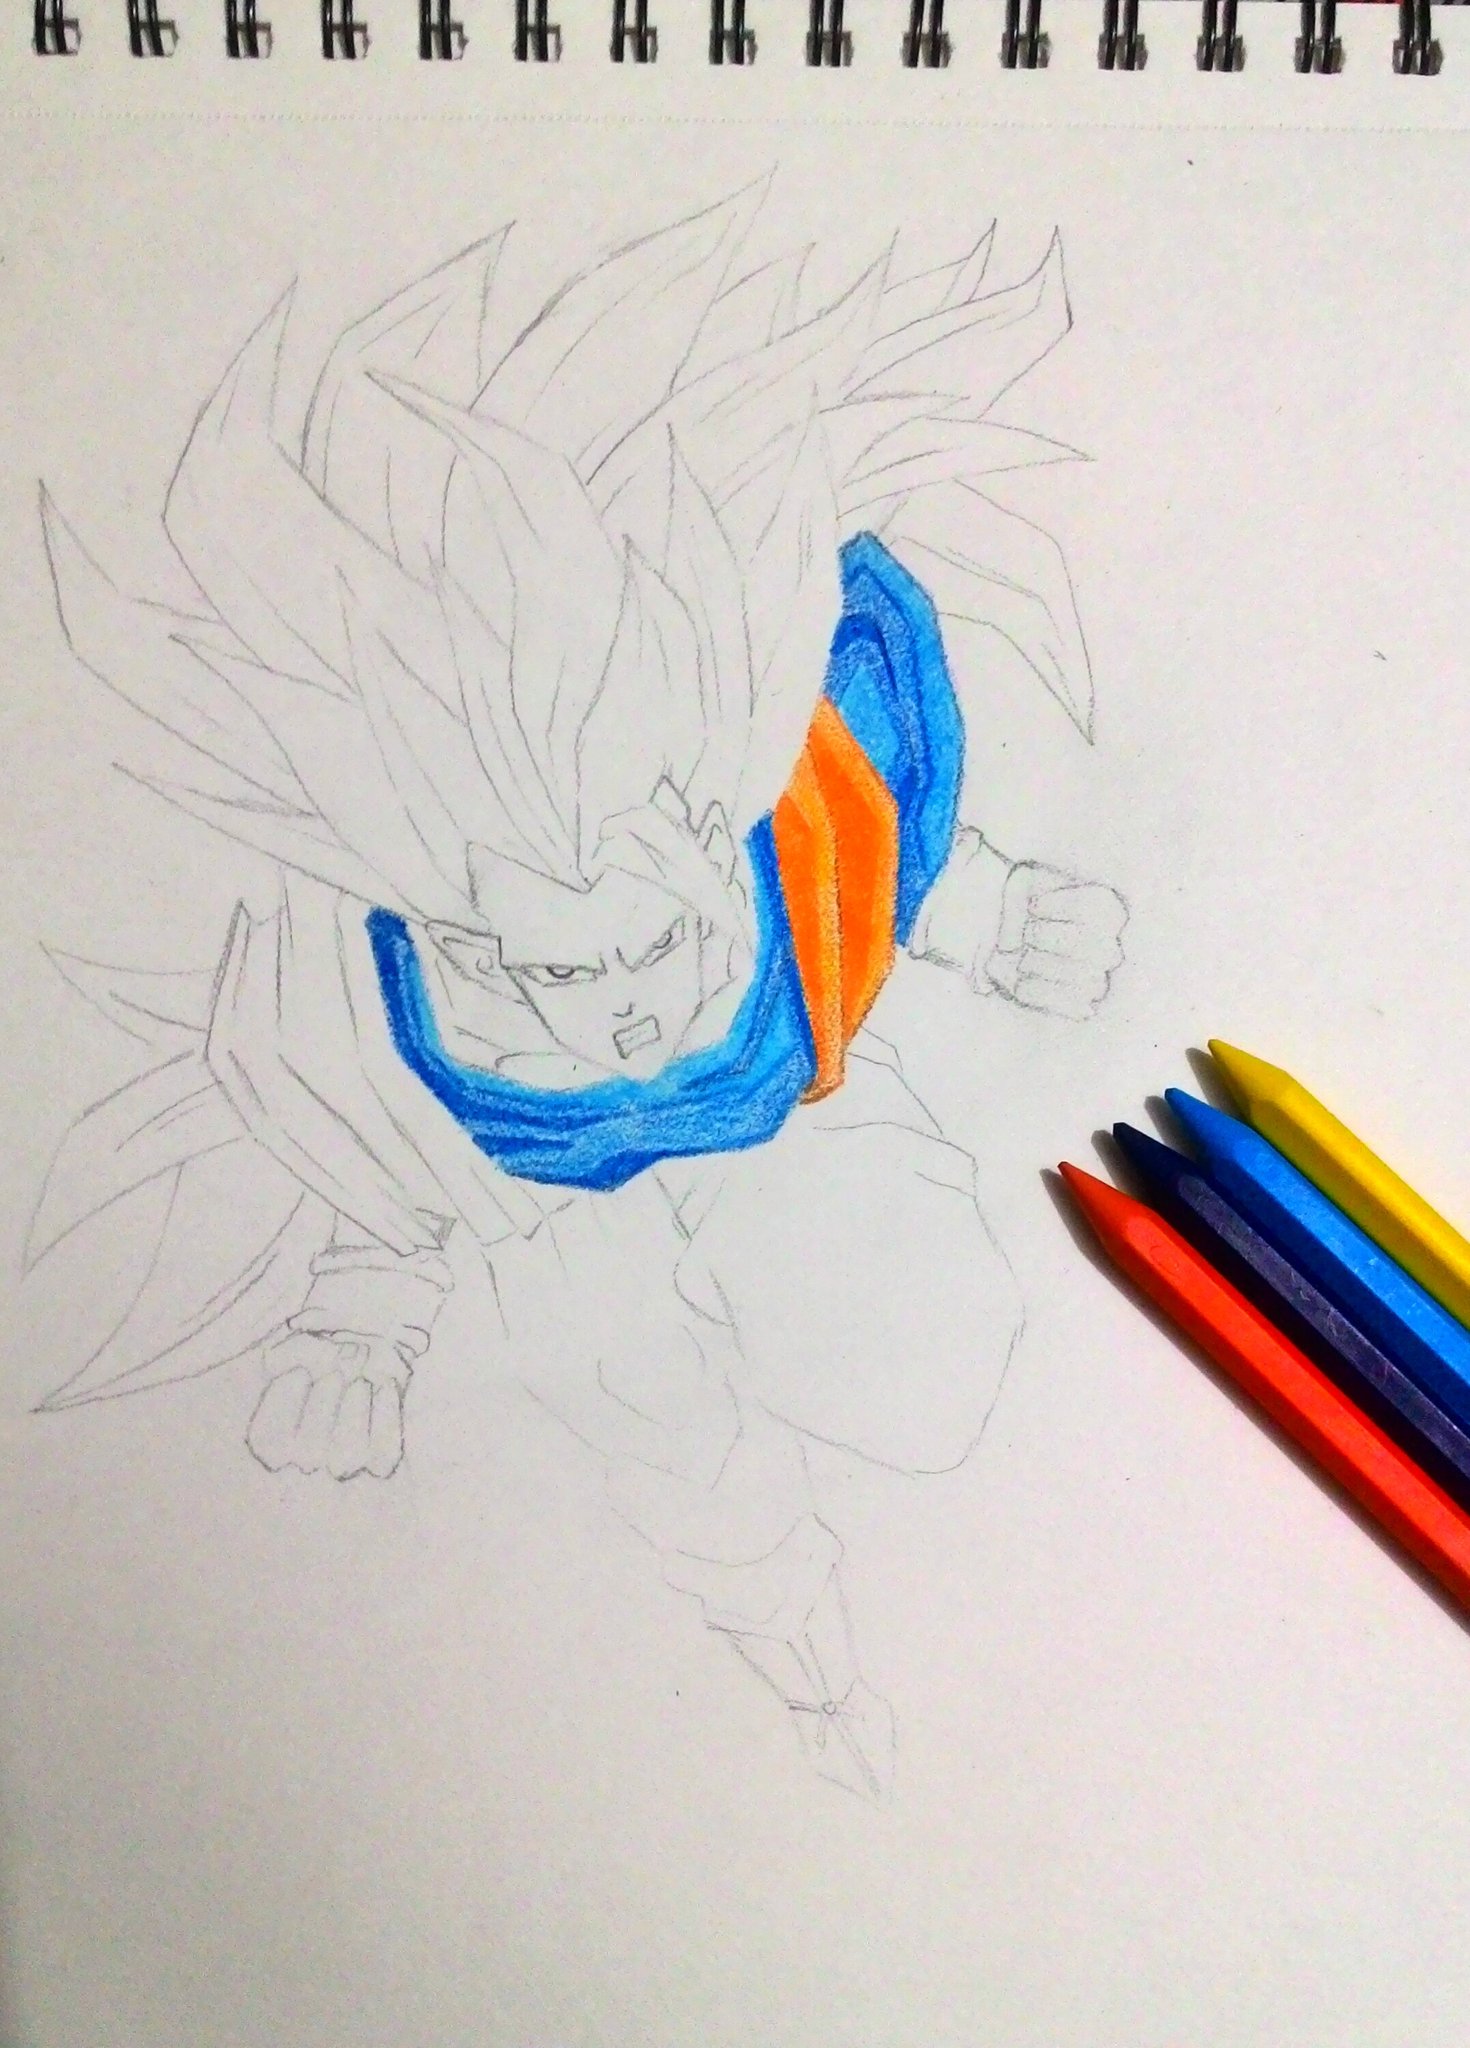 Drawing the Goku Super Saiyajin